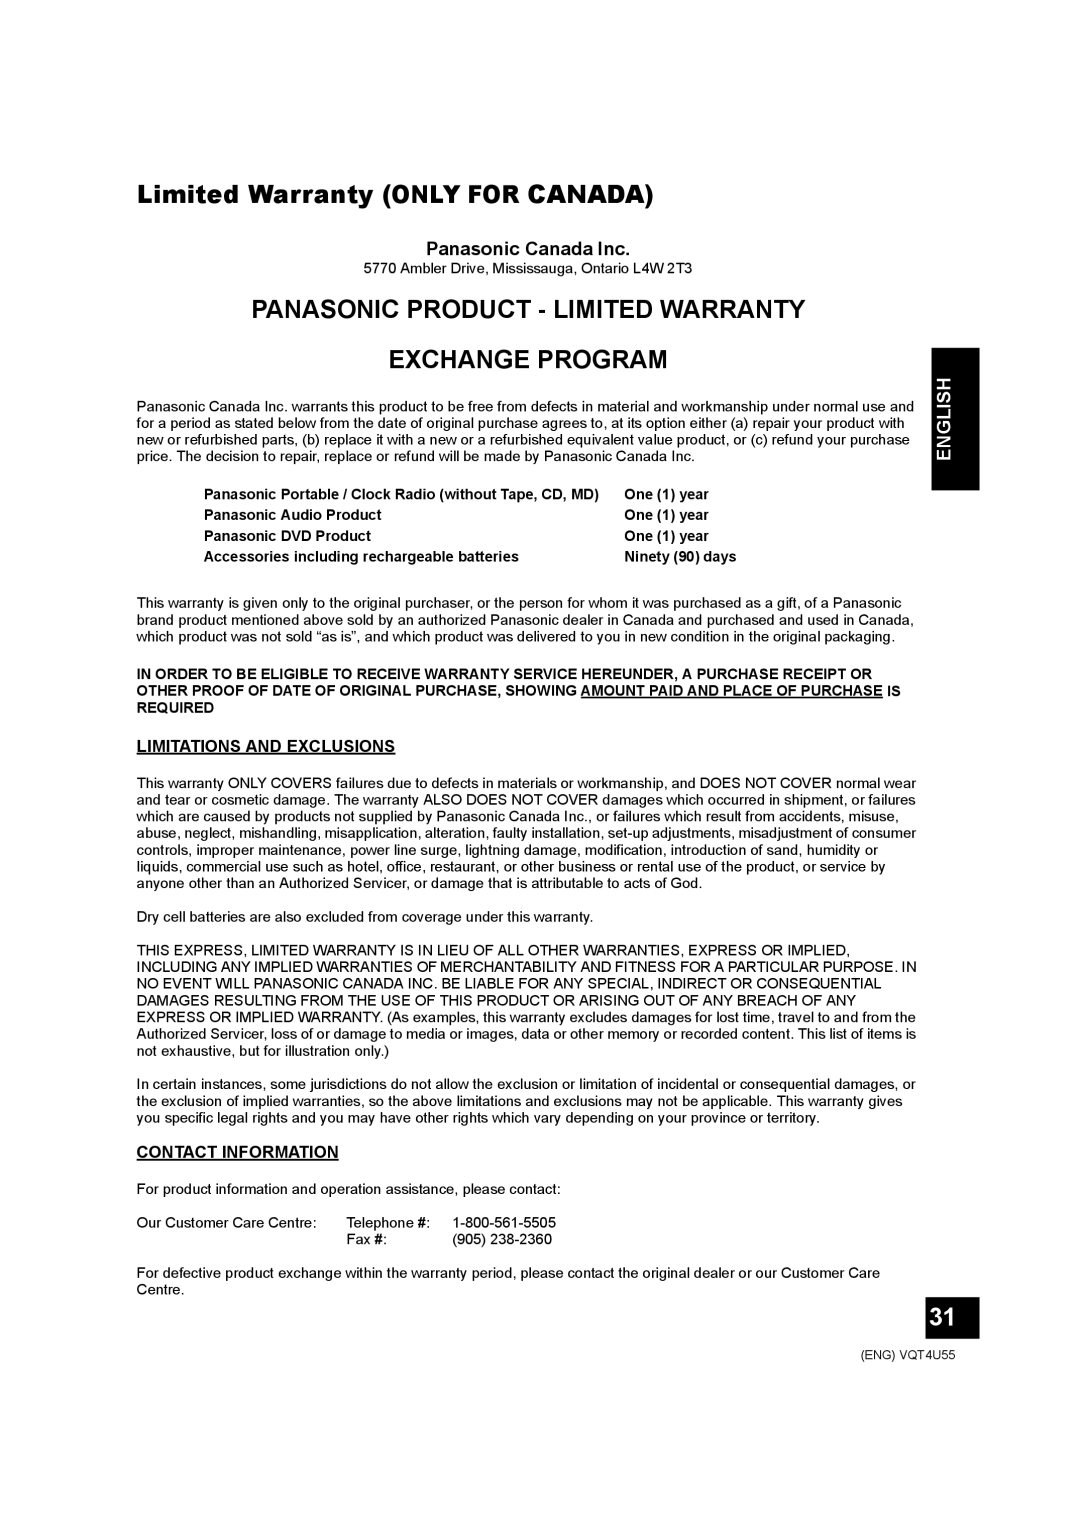 Panasonic SC-NE5 Limited Warranty ONLY FOR CANADA, Panasonic Product - Limited Warranty, Exchange Program, English 